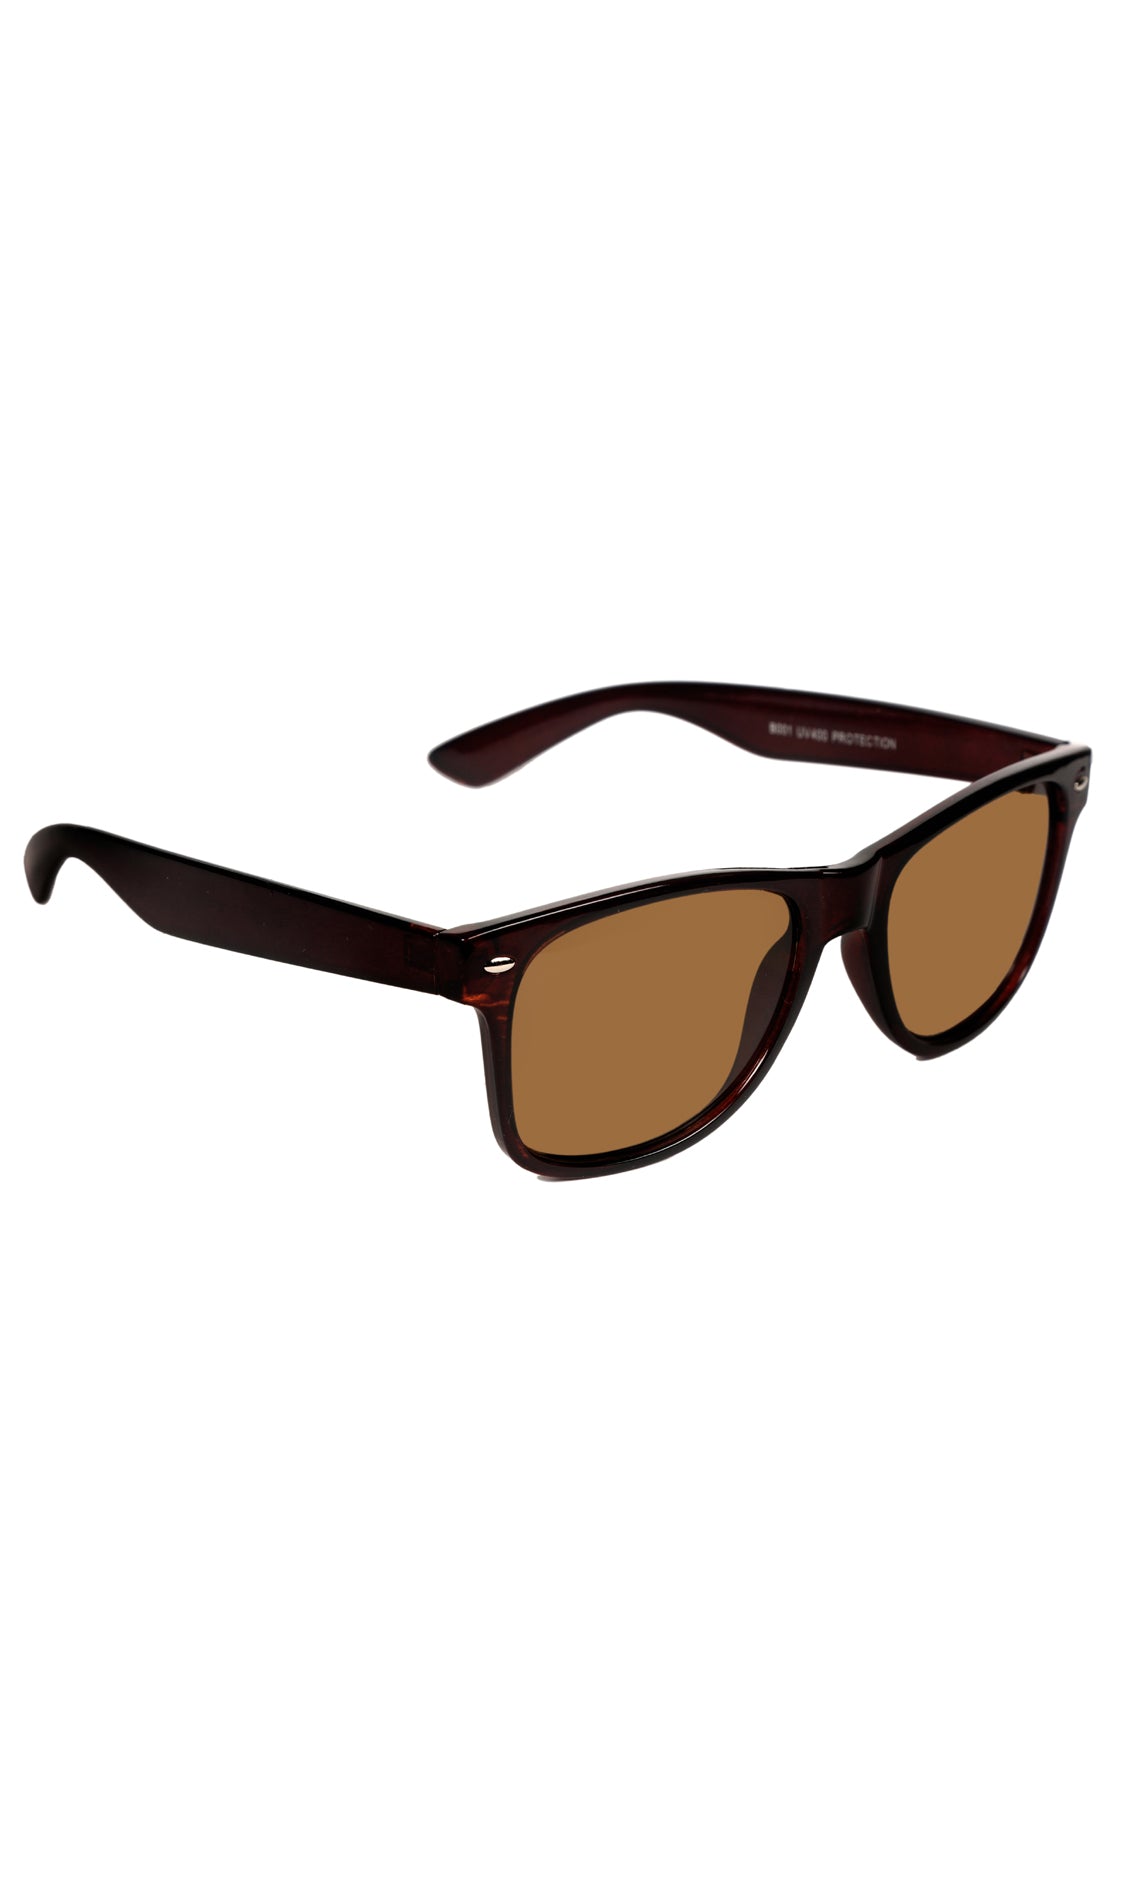 Jodykoes® Stylish Looking Fashionable UV Protection Sunglasses Wayfare Shape Eyeshades For Men and Women (Brown) - Jodykoes ®